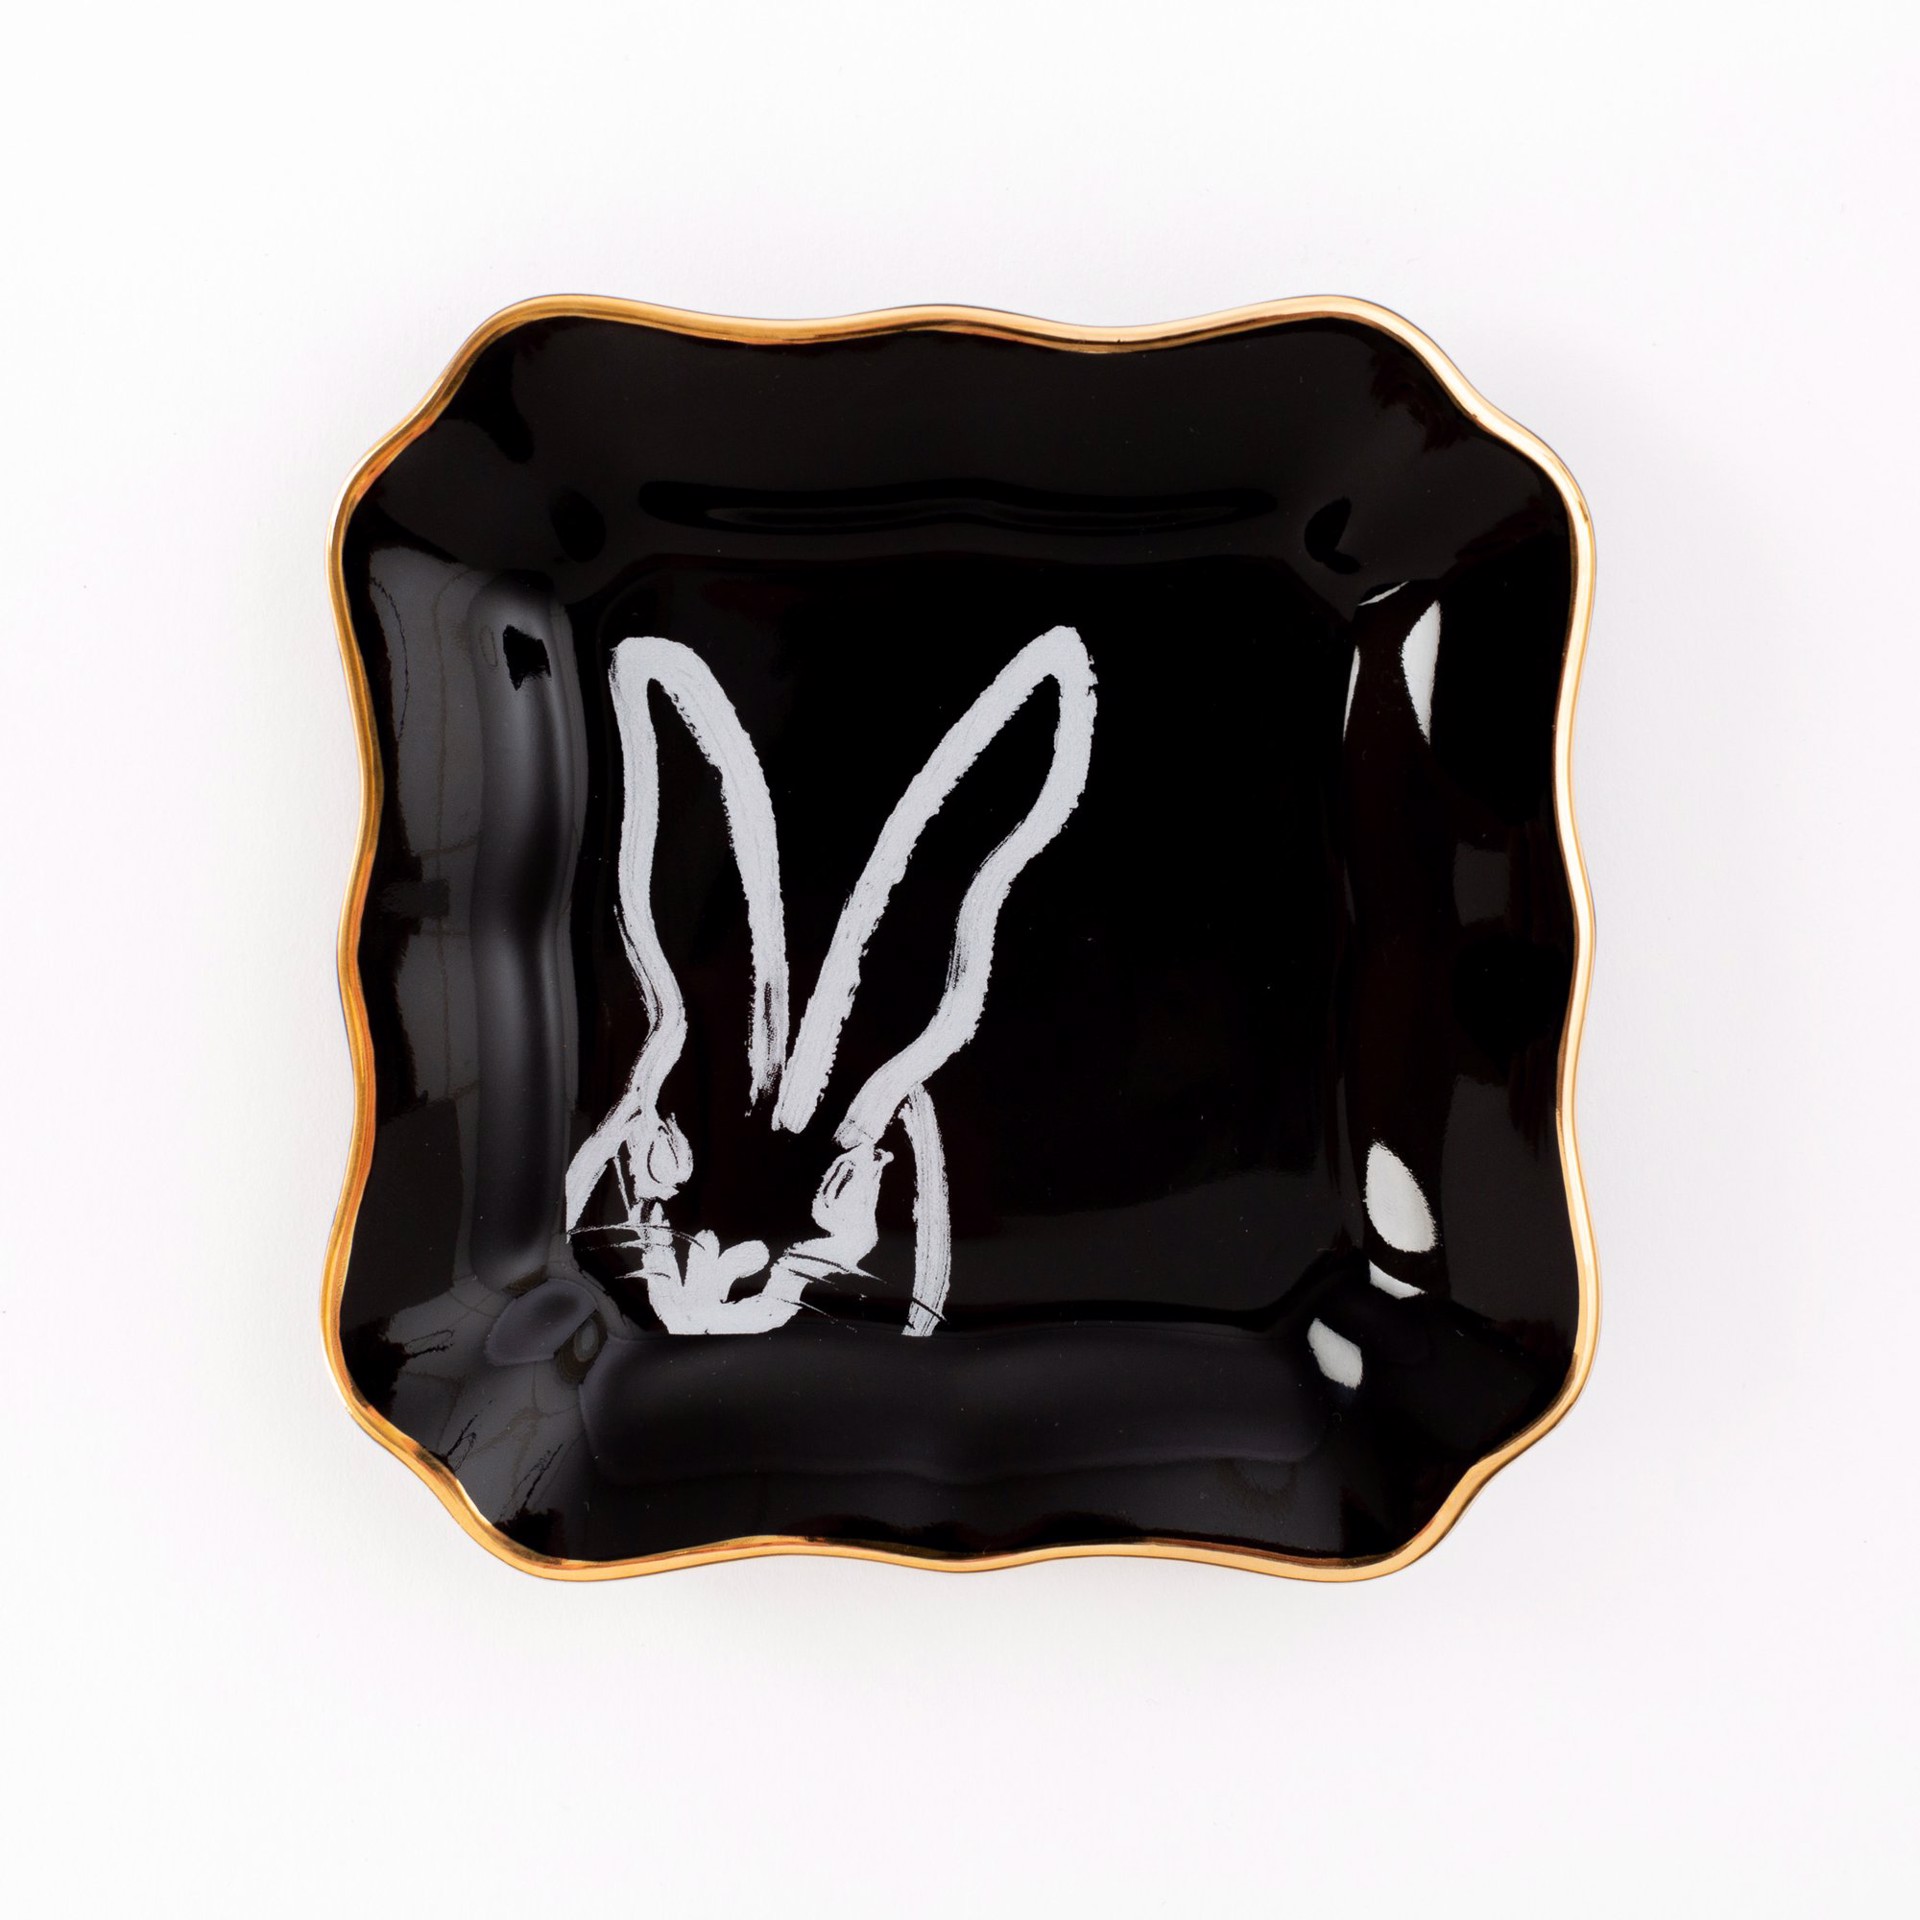 Bunny Portrait Plate - Black by Hunt Slonem (Hop Up Shop)